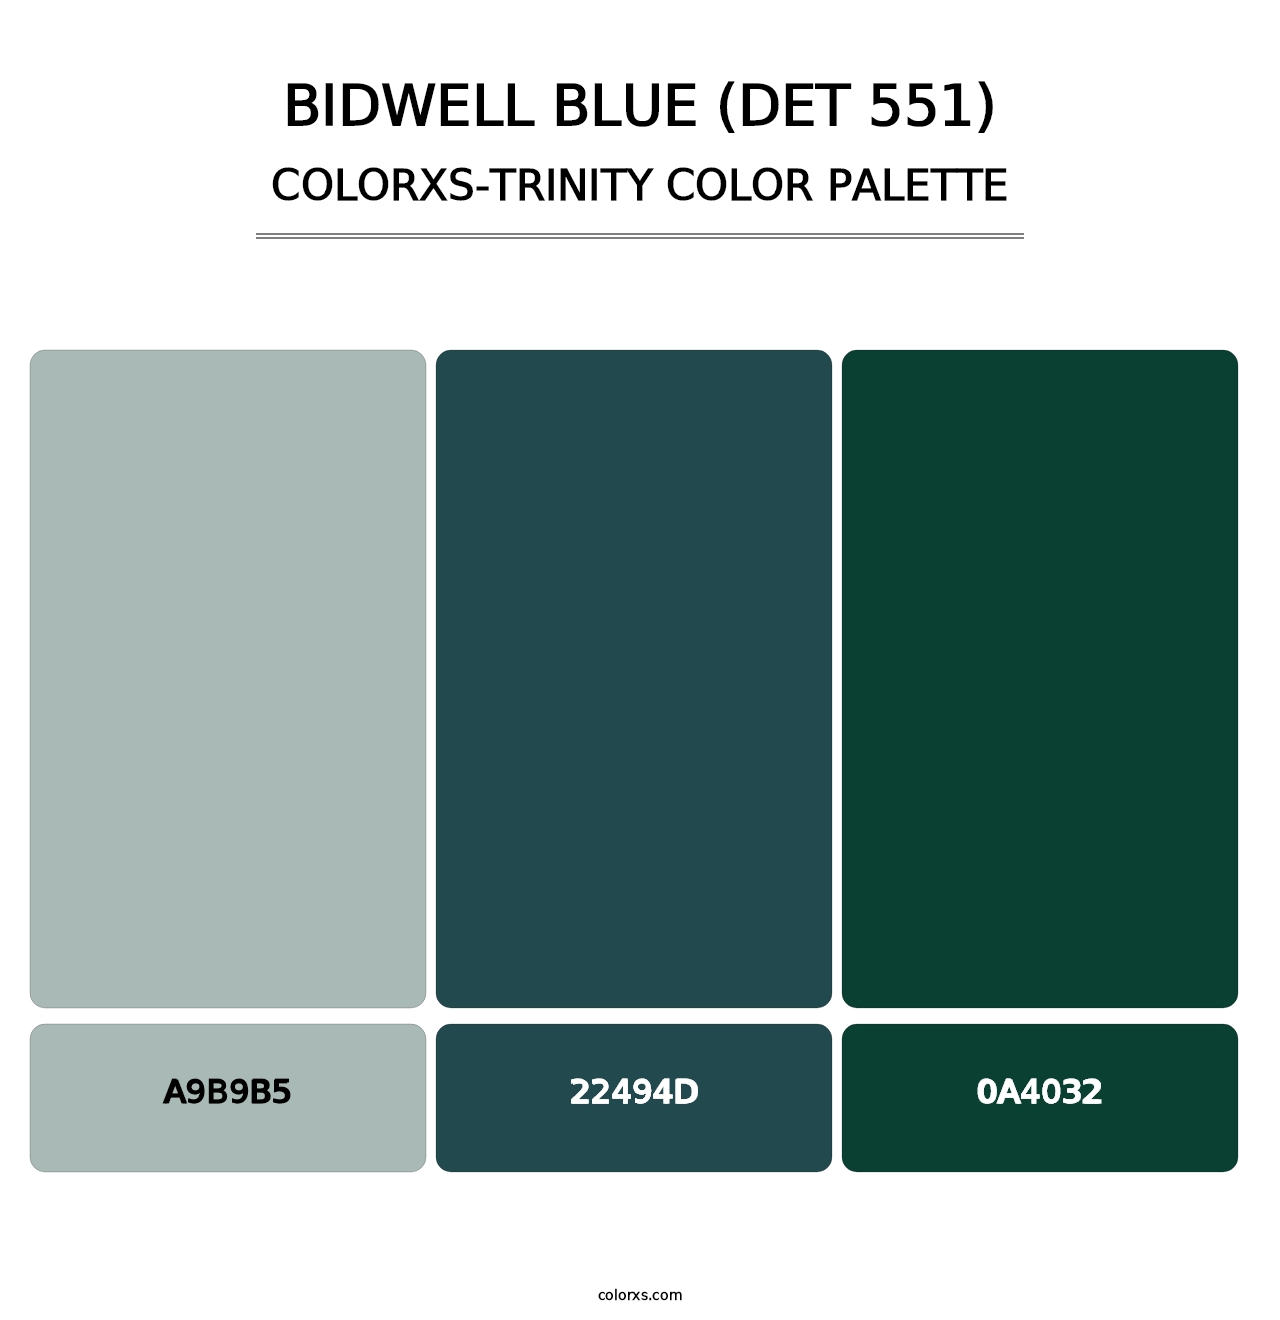 Bidwell Blue (DET 551) - Colorxs Trinity Palette